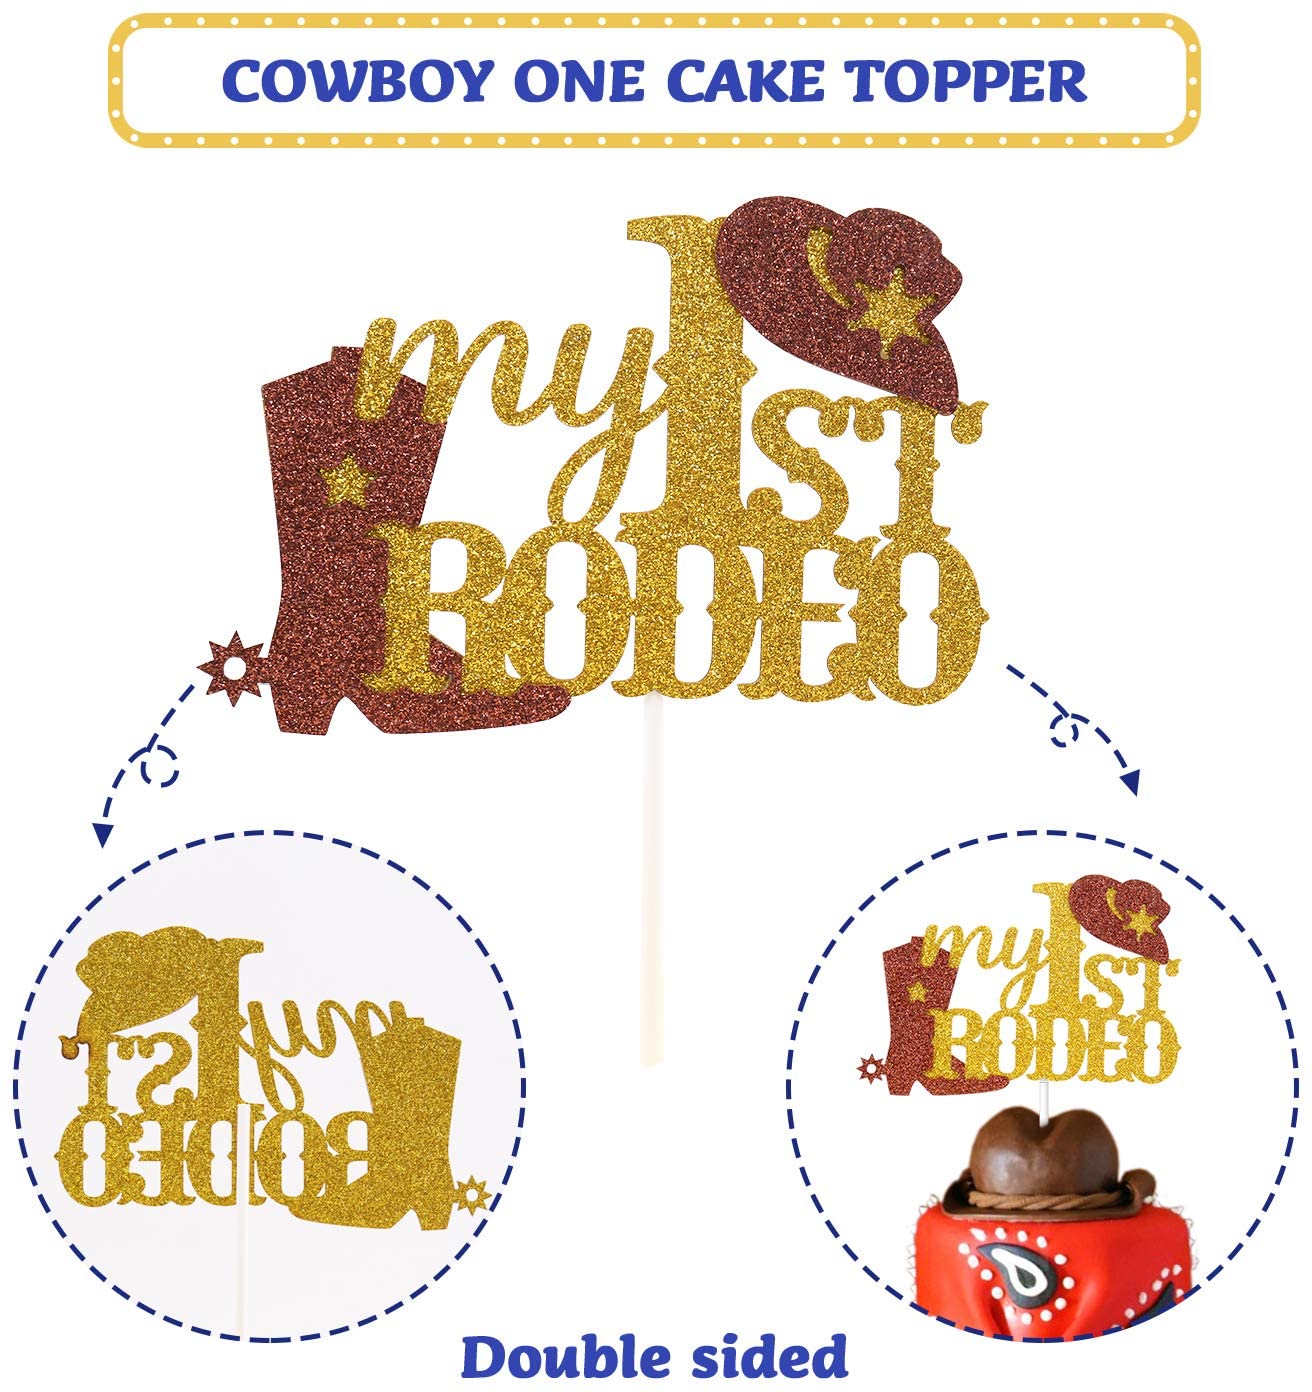 Birthday Cowboy -My First Rodeo Preselection Cake Smash Set